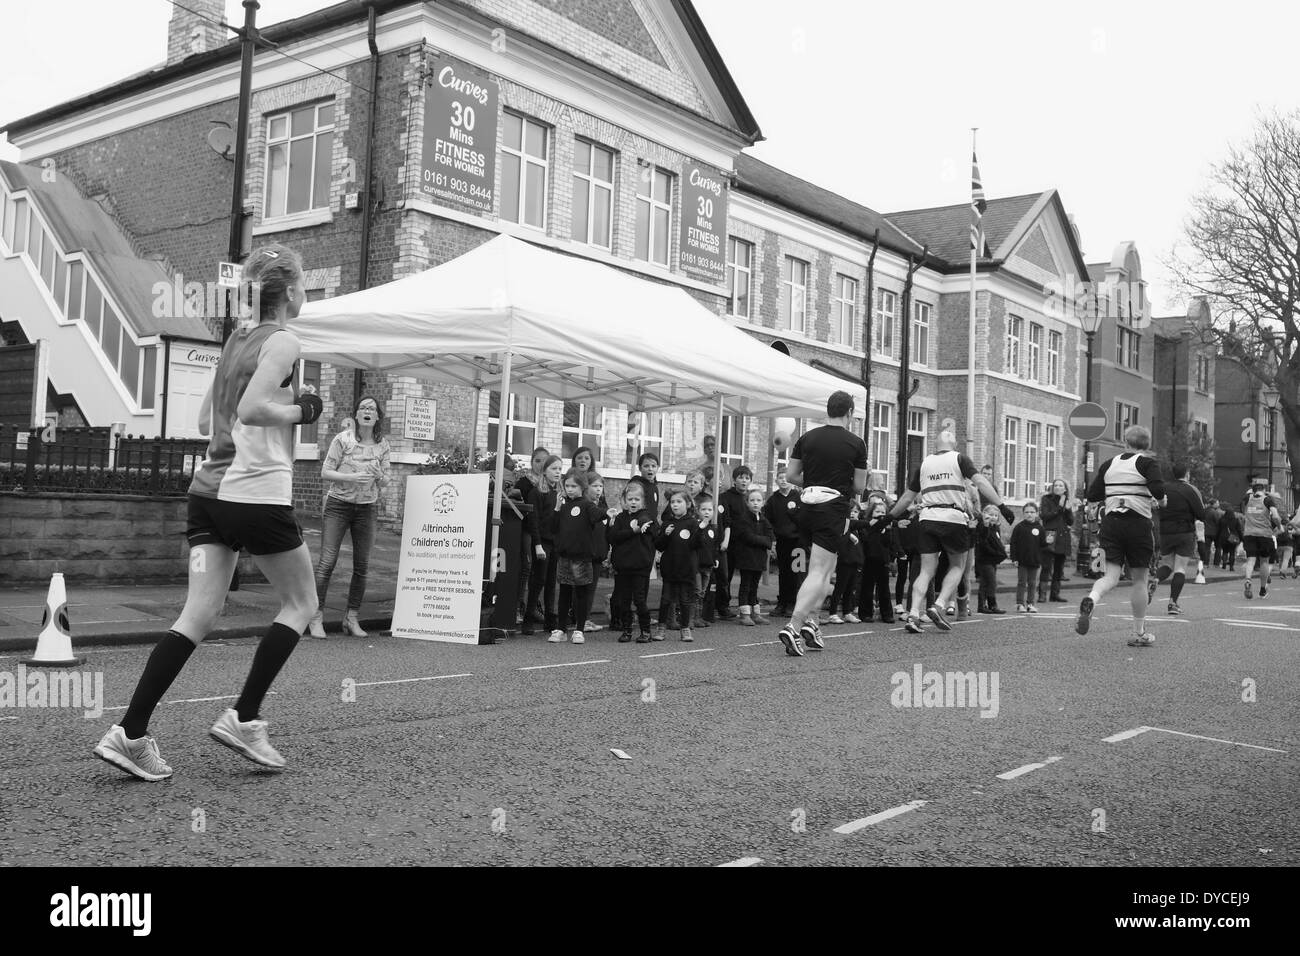 The 2014 Manchester Marathon: Runners reach Altrincham in Cheshire- Atrincham Children's Choir cheer the runners Stock Photo